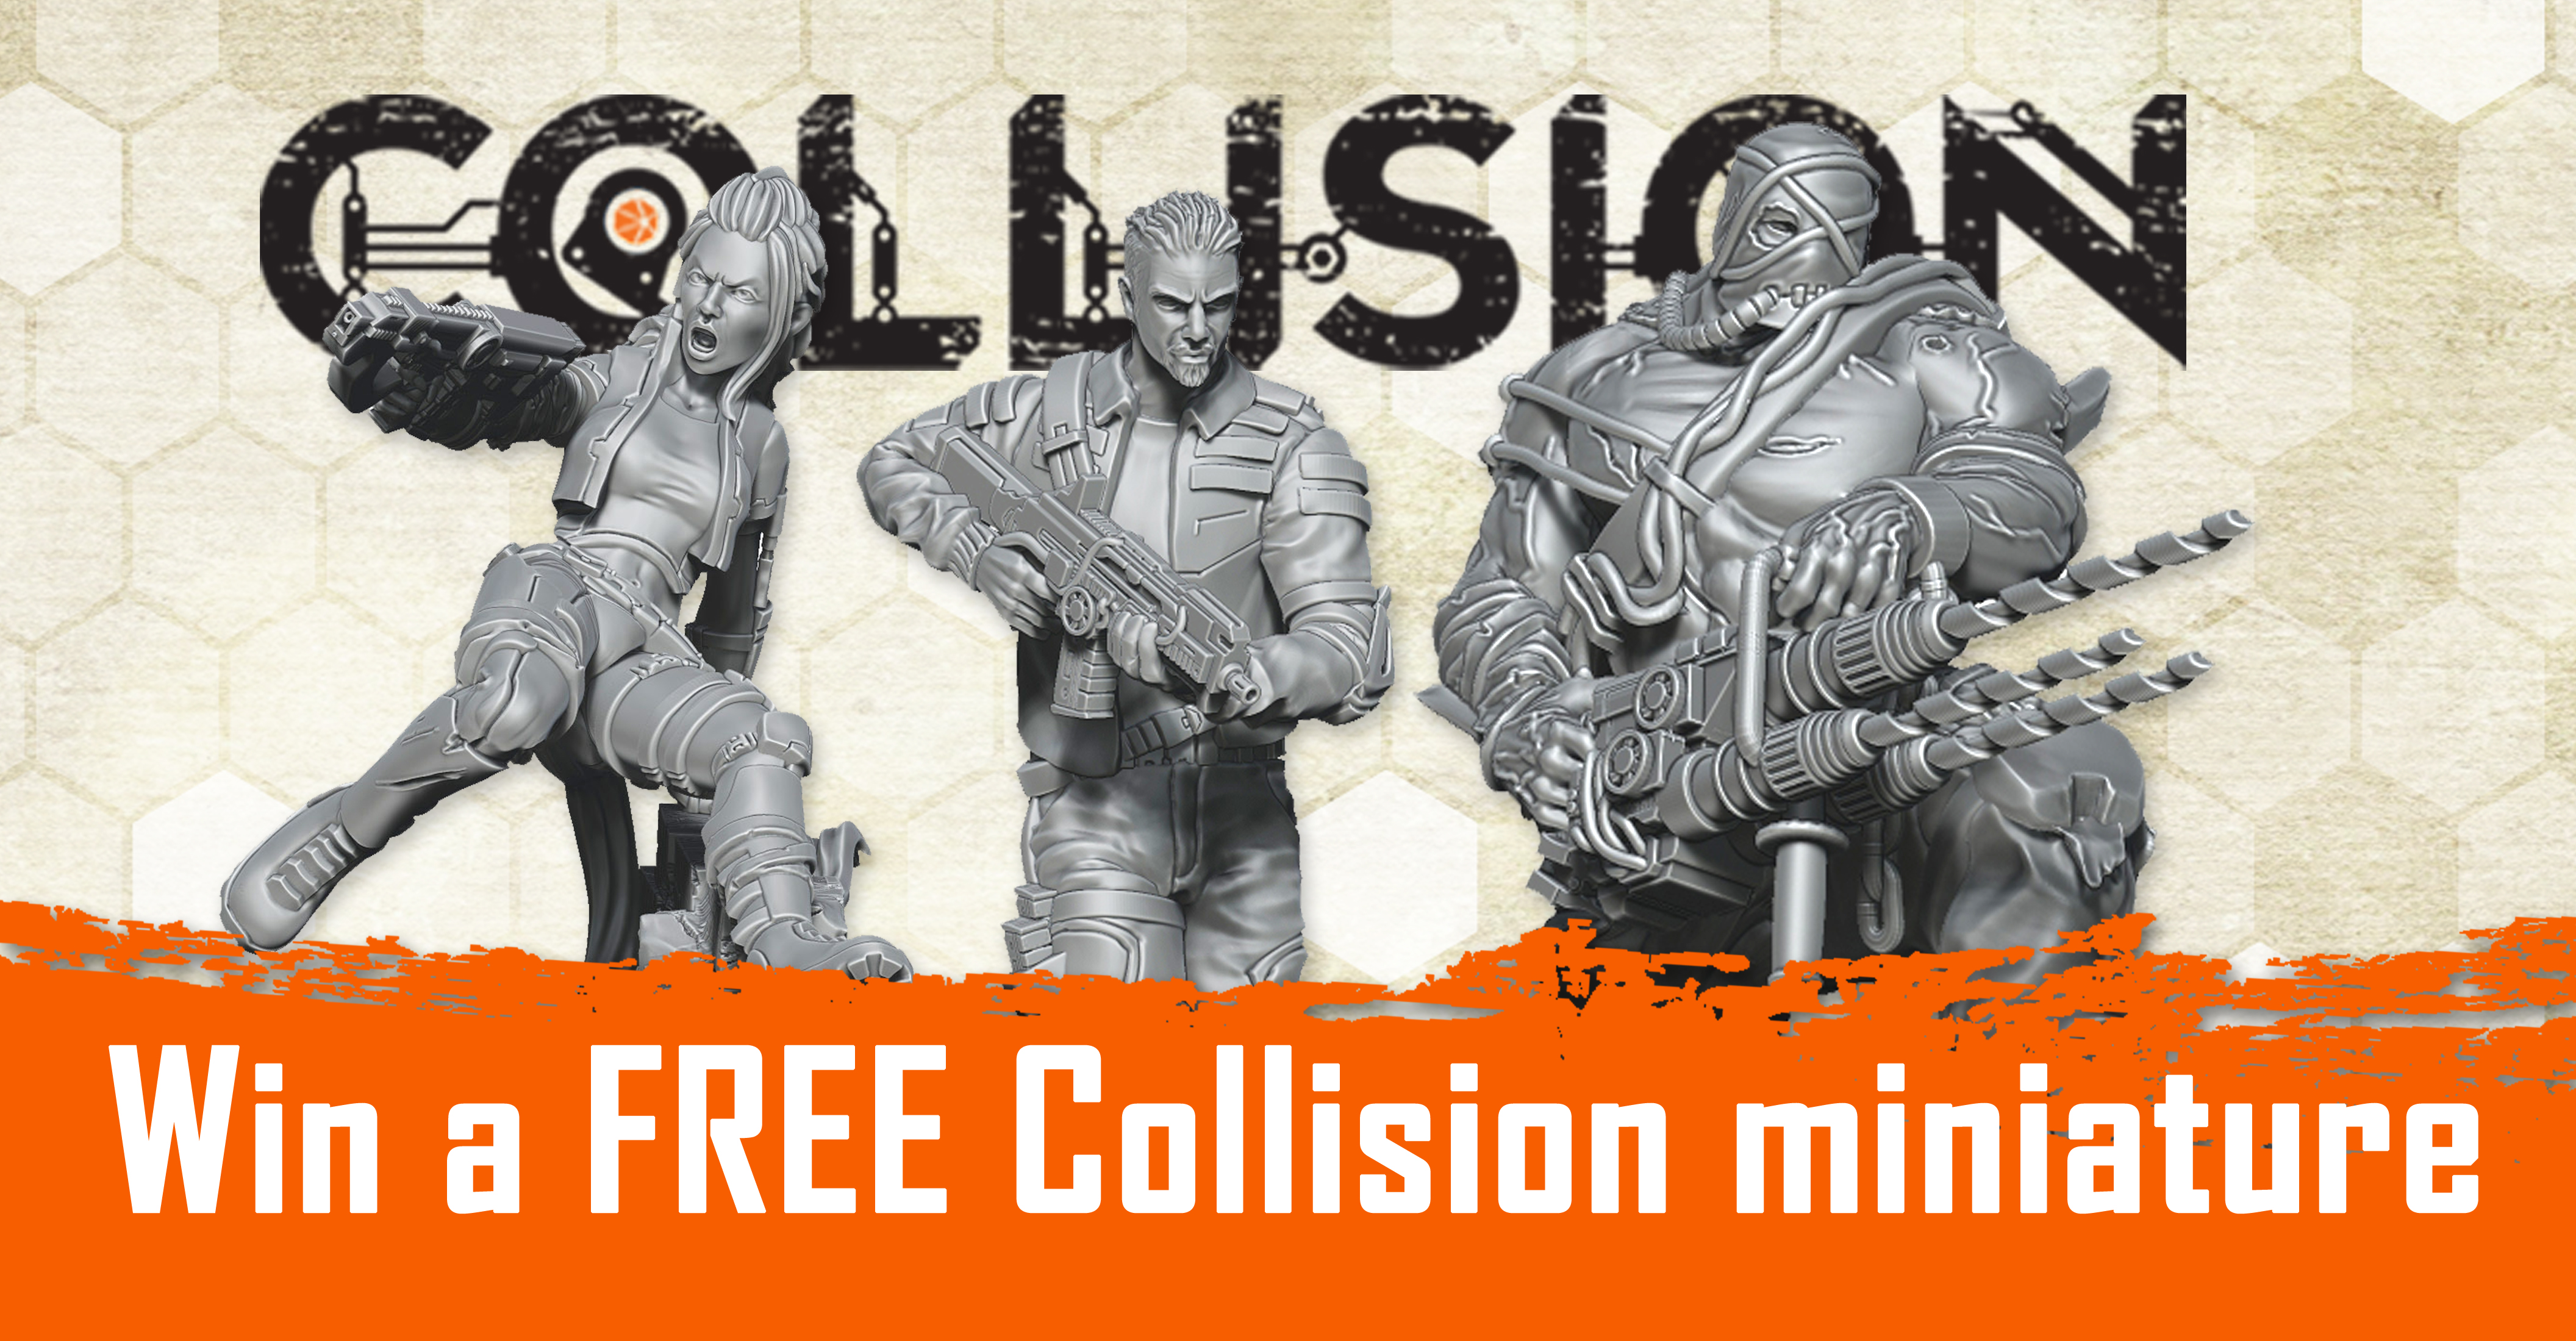 Win a FREE Collision miniature!